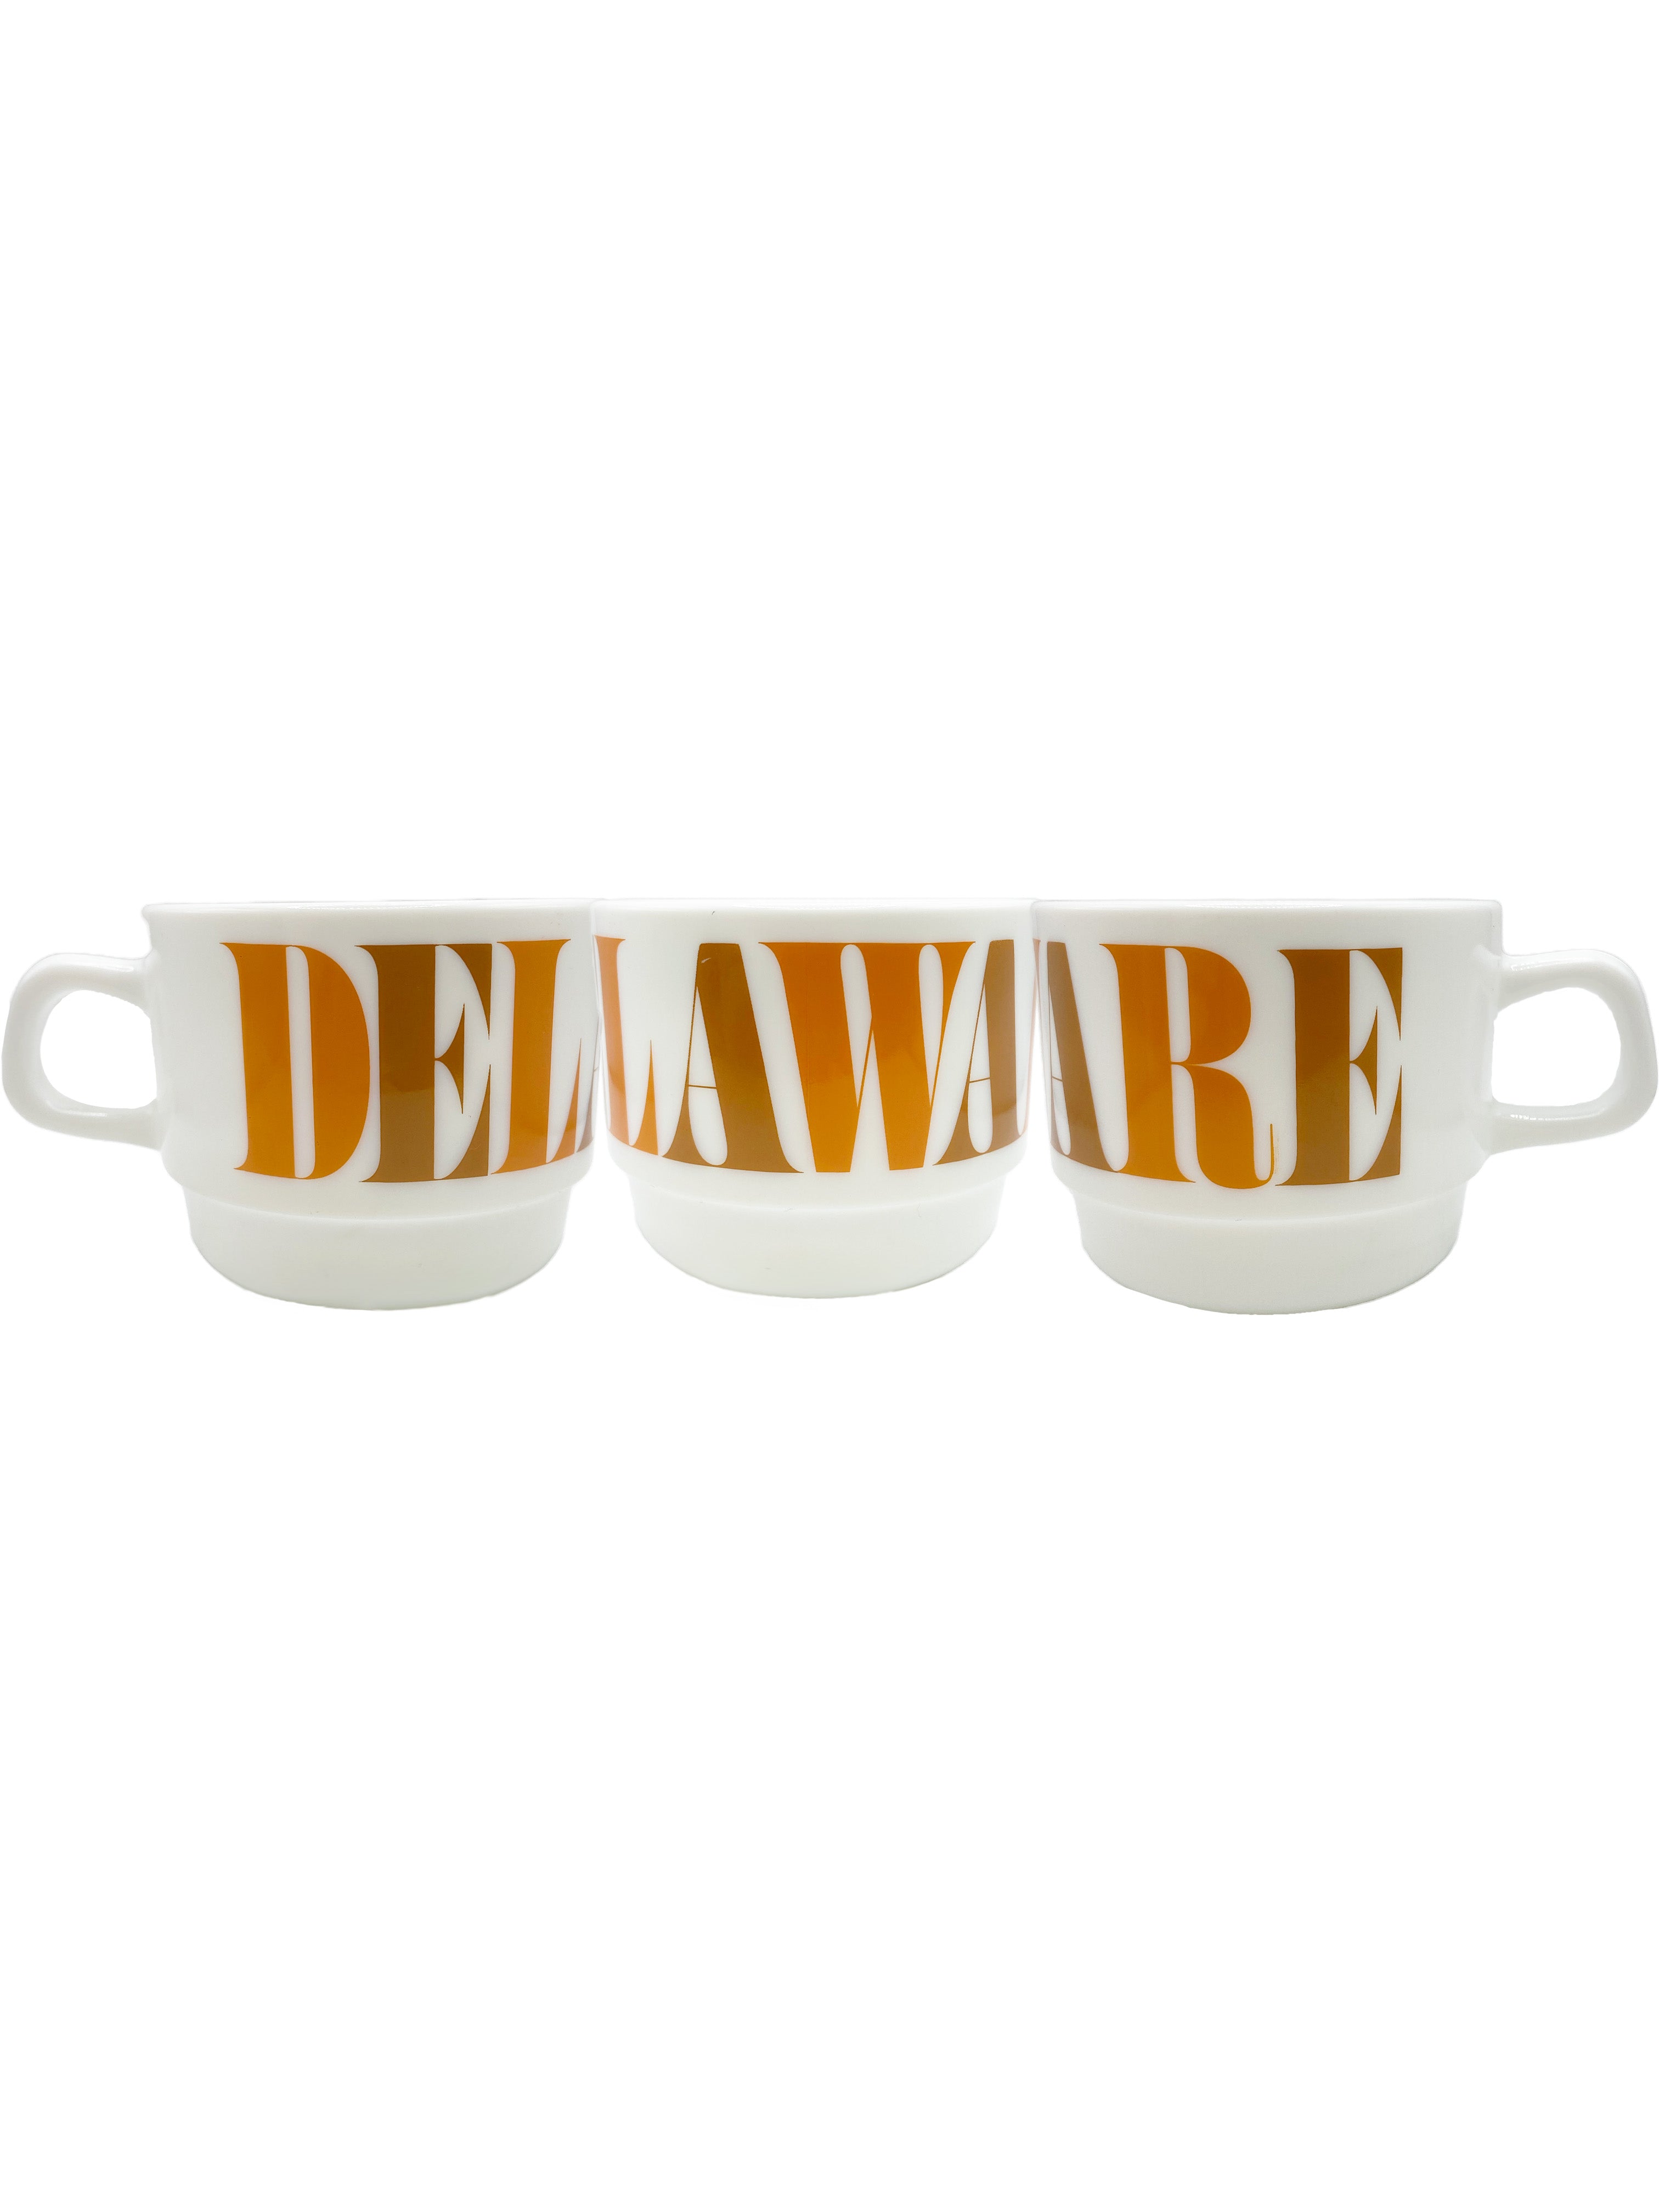 Delaware Mug 8oz